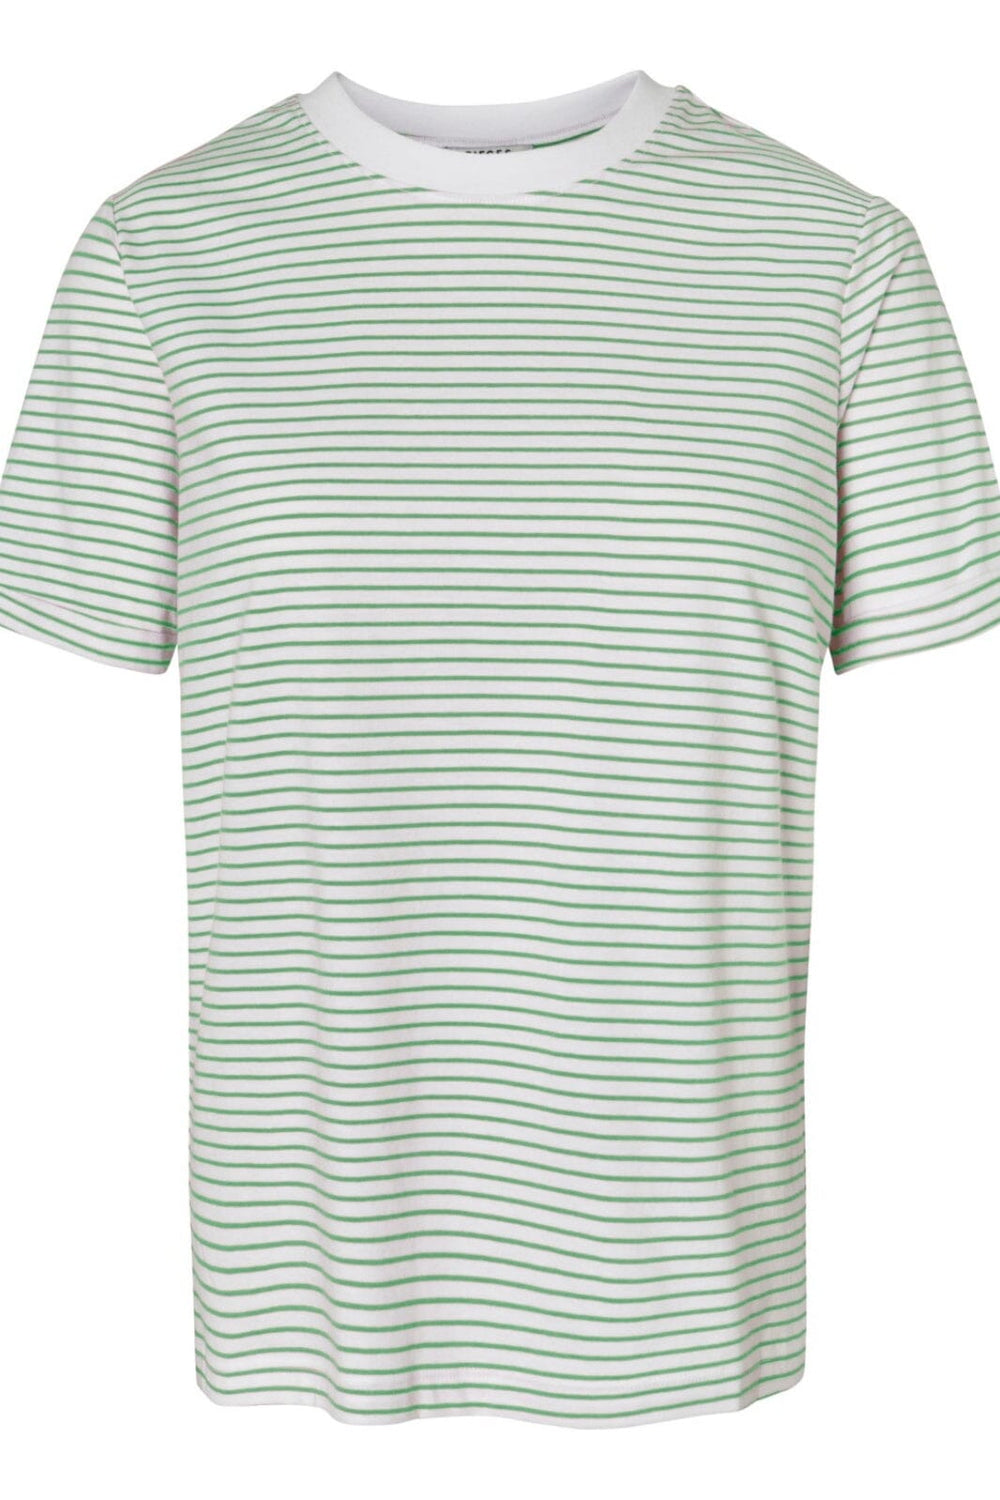 Pieces - Pcria Ss Fold Up Tee Stripes Bc - Bright White Stripes:Absinth Green 